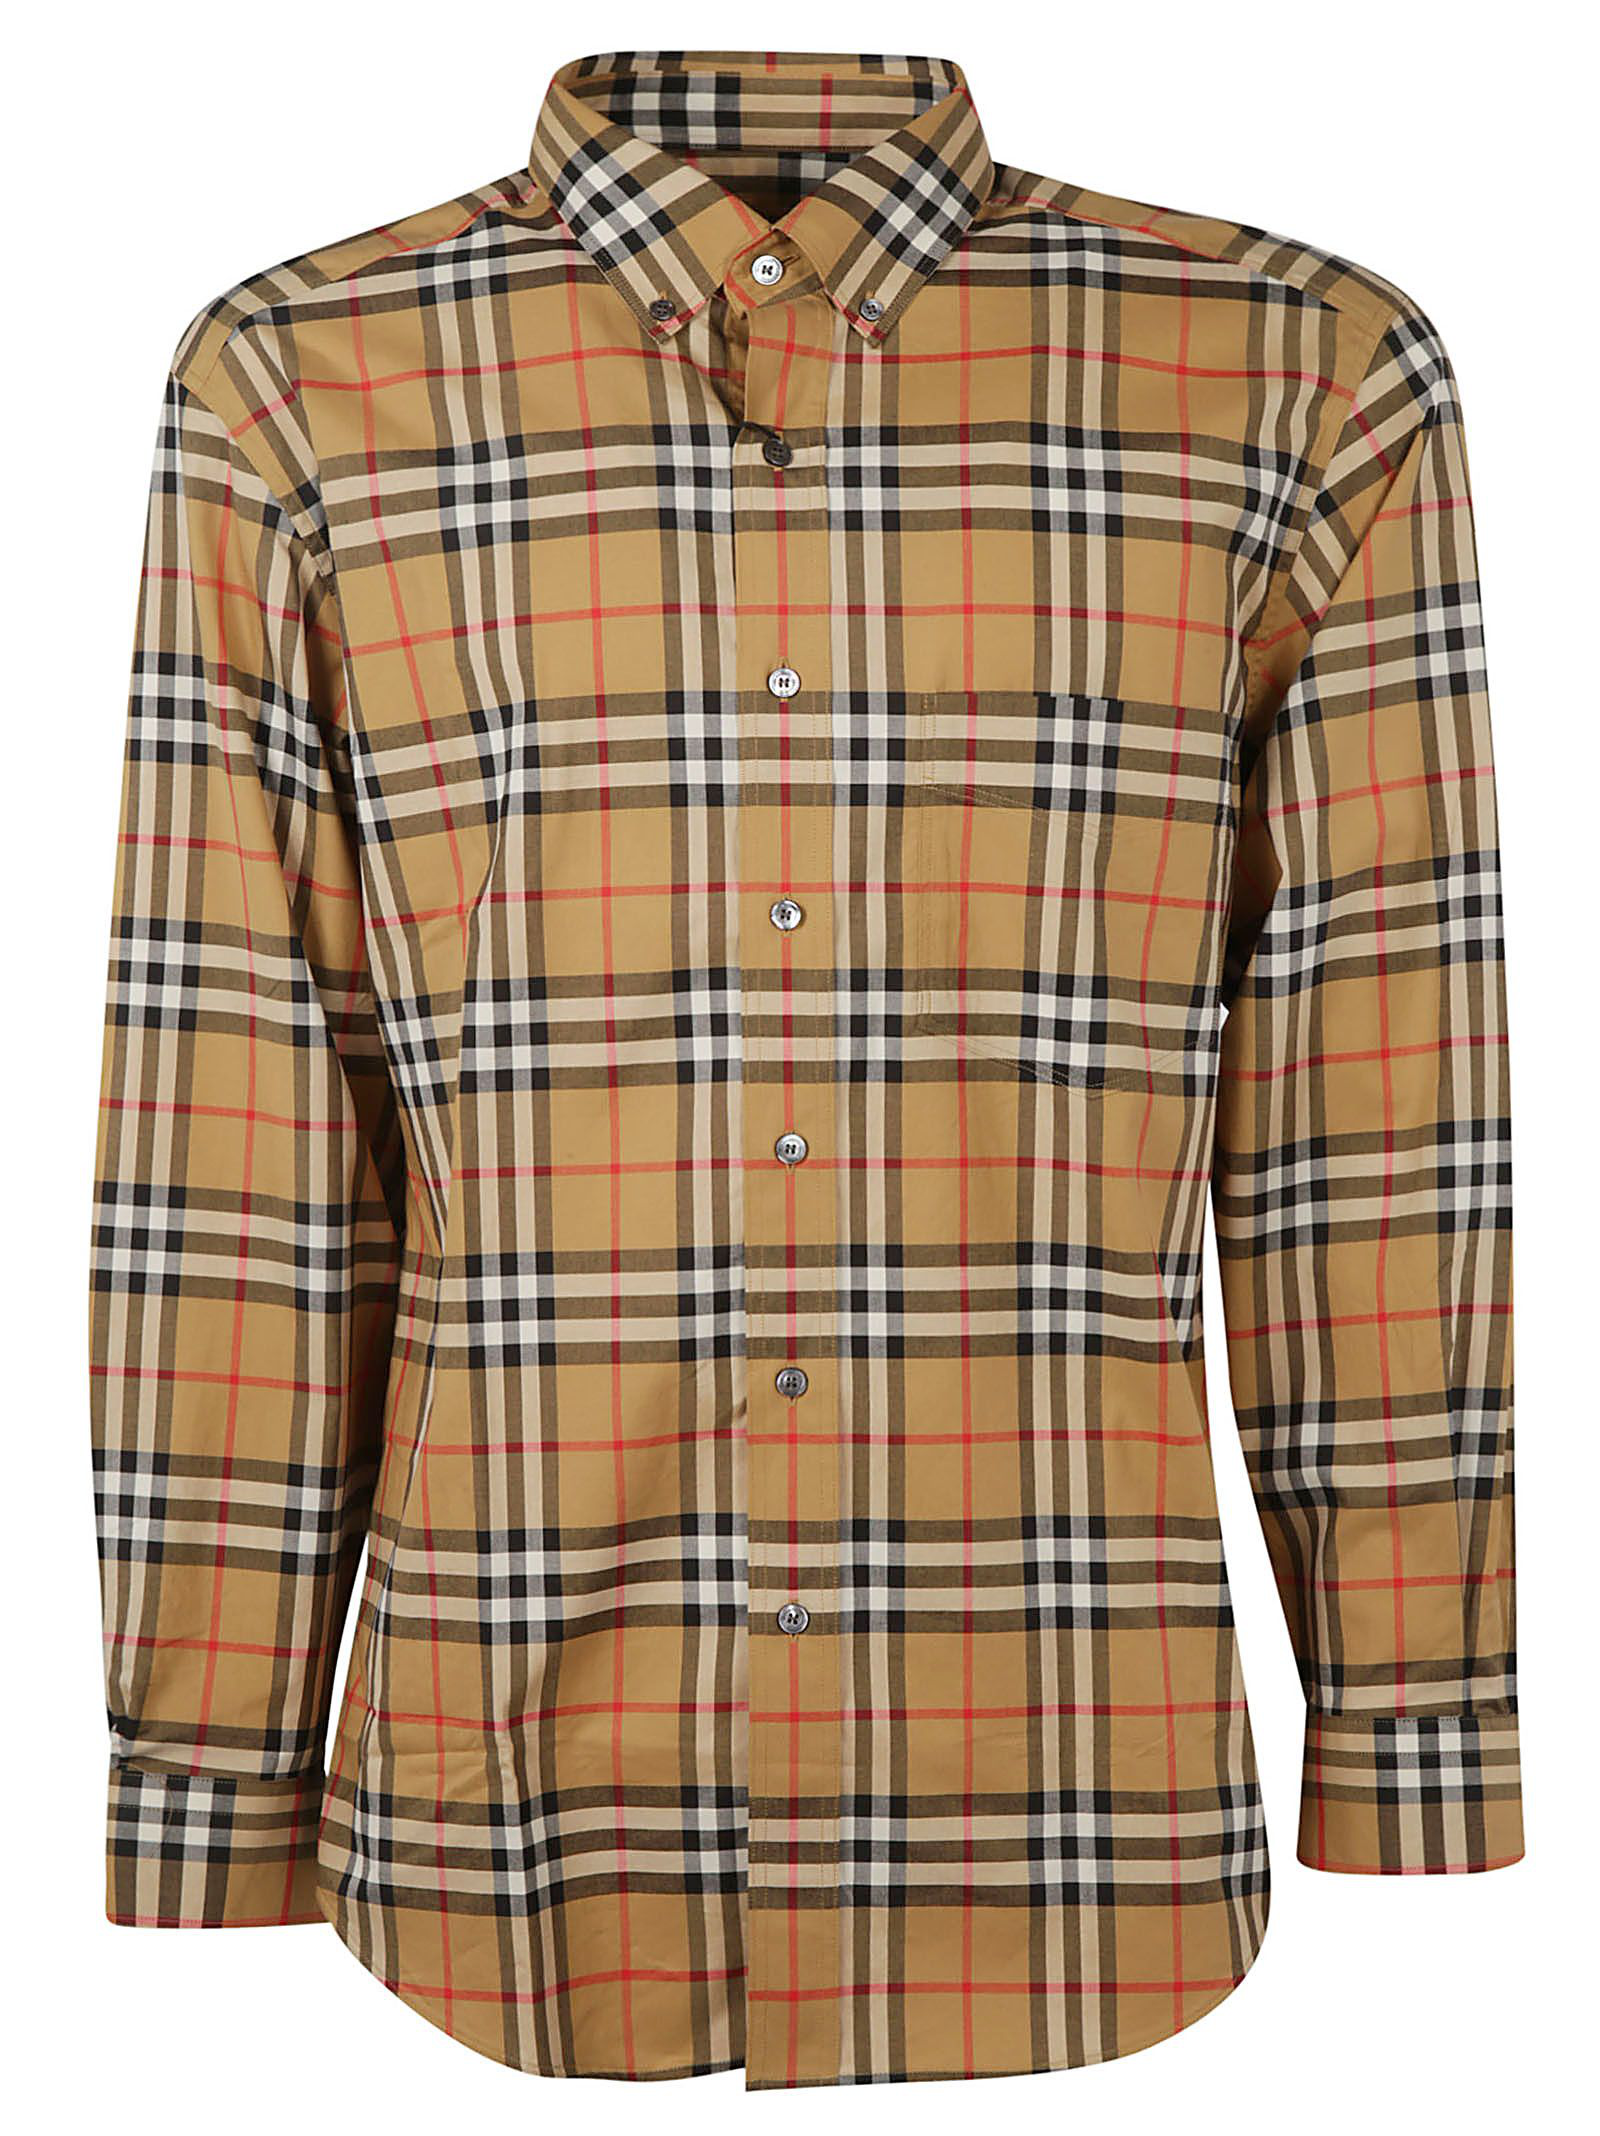 Burberry Jameson Checkered Shirt In Brown/multicolor | ModeSens